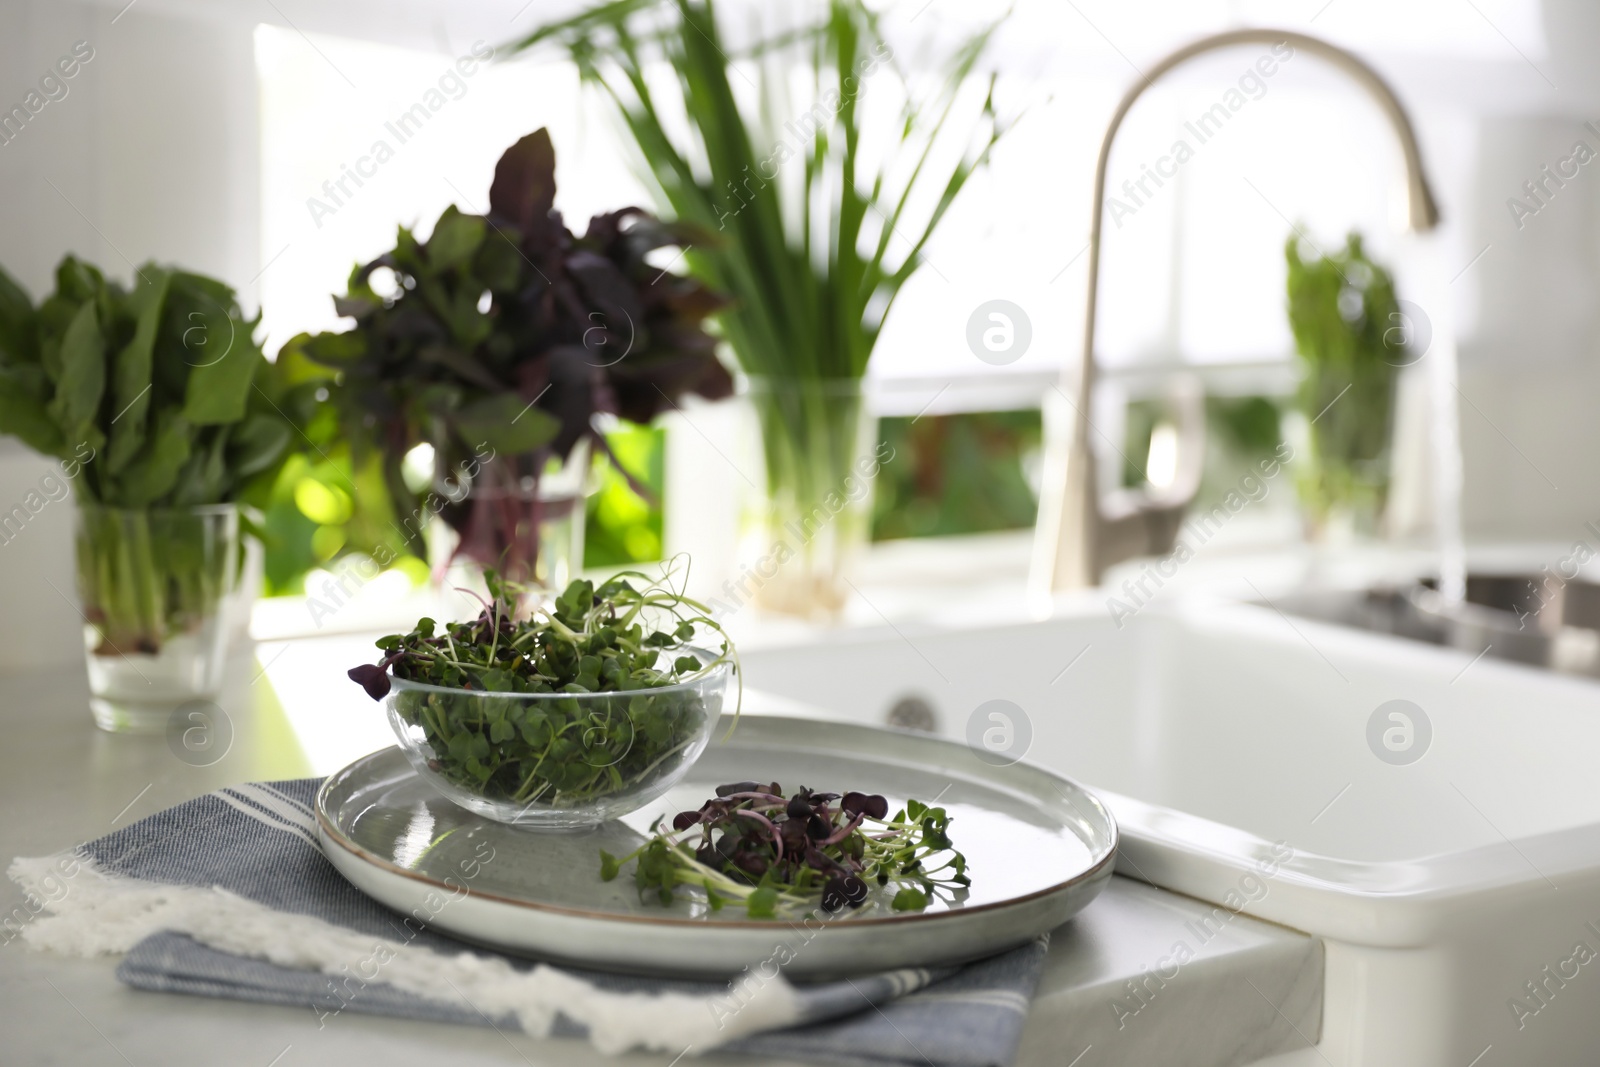 Photo of Bowlfresh organic microgreen on countertop near sink in kitchen